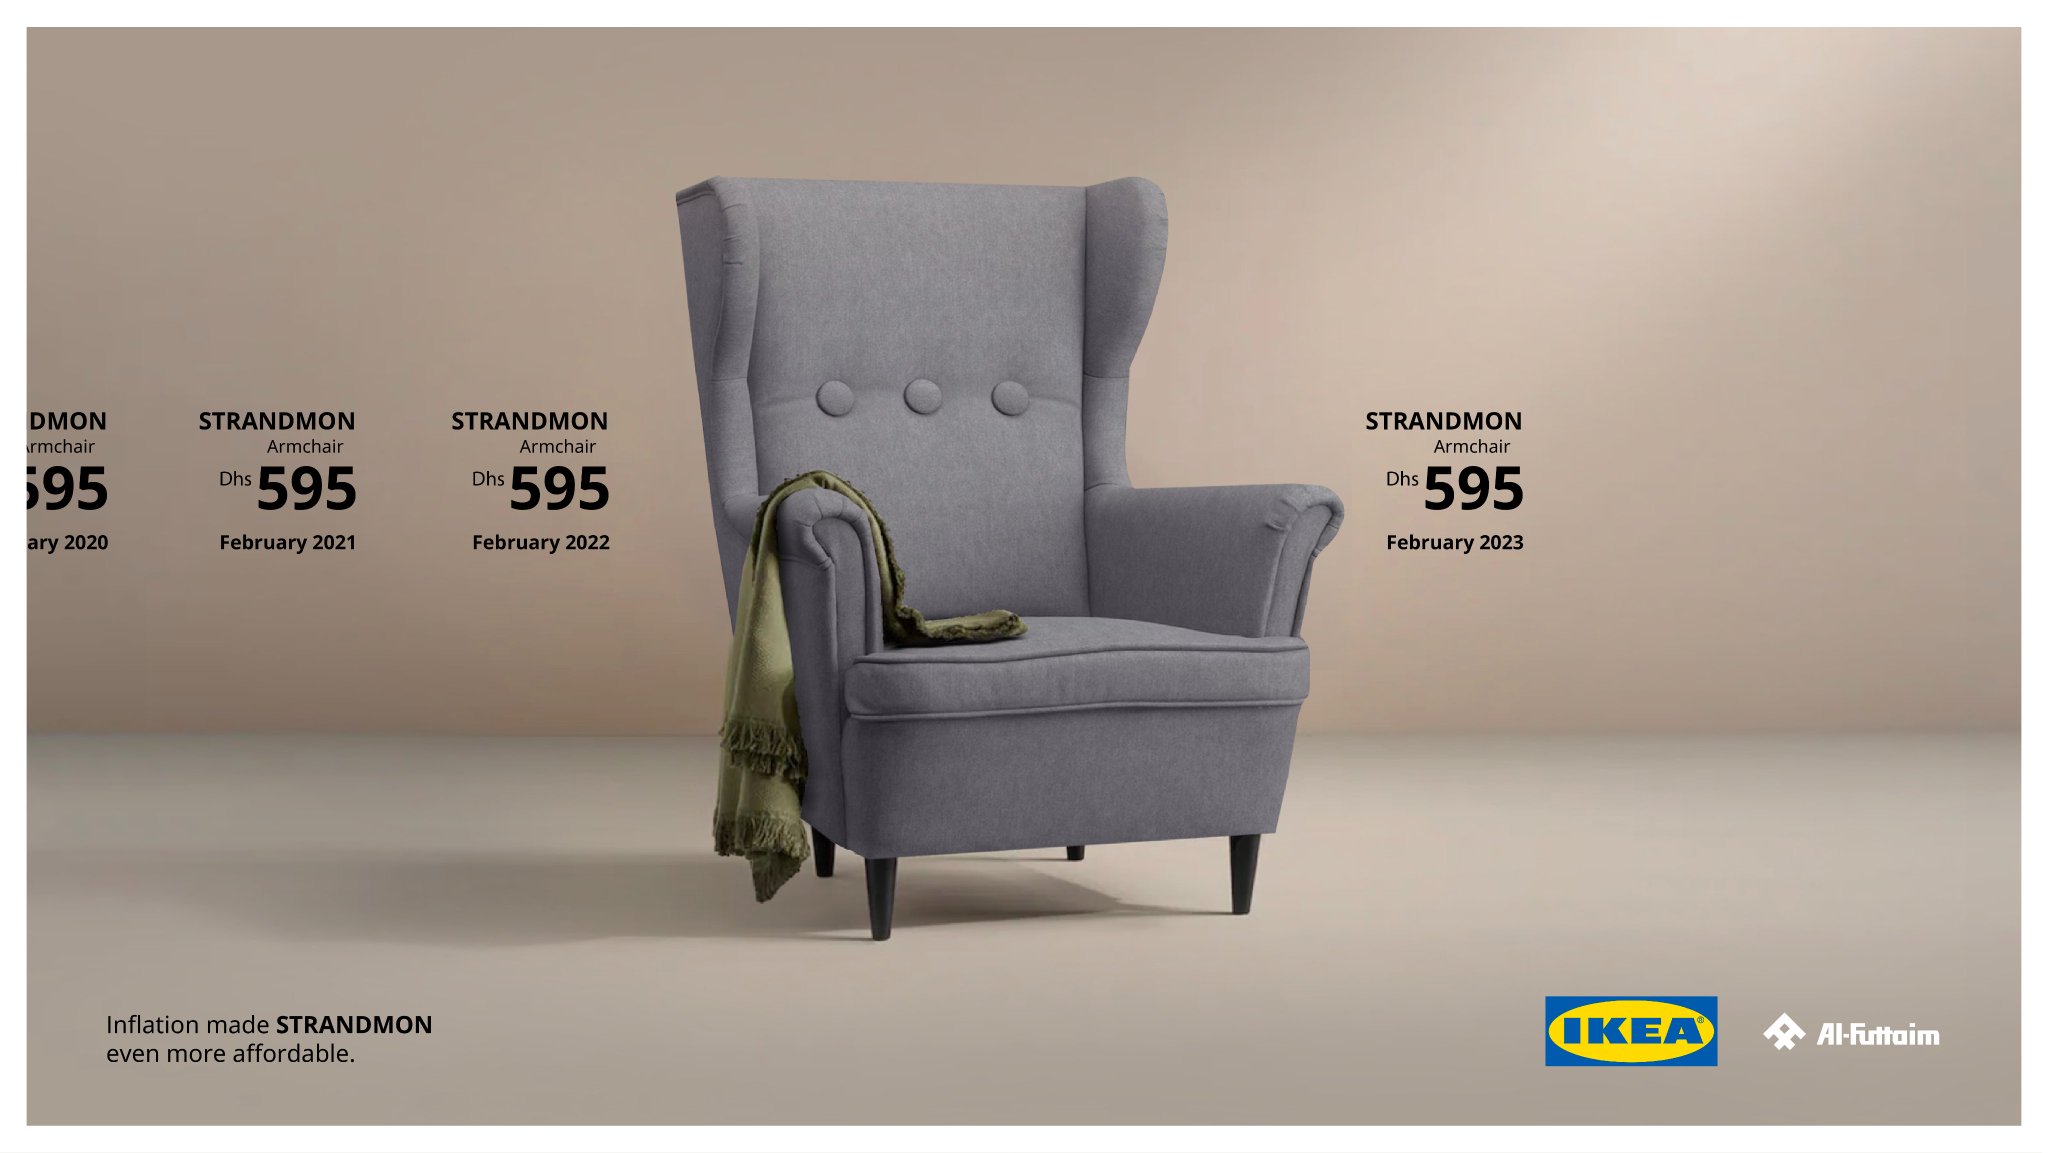 IKEA INFLATION-PROOF Strandmon seat